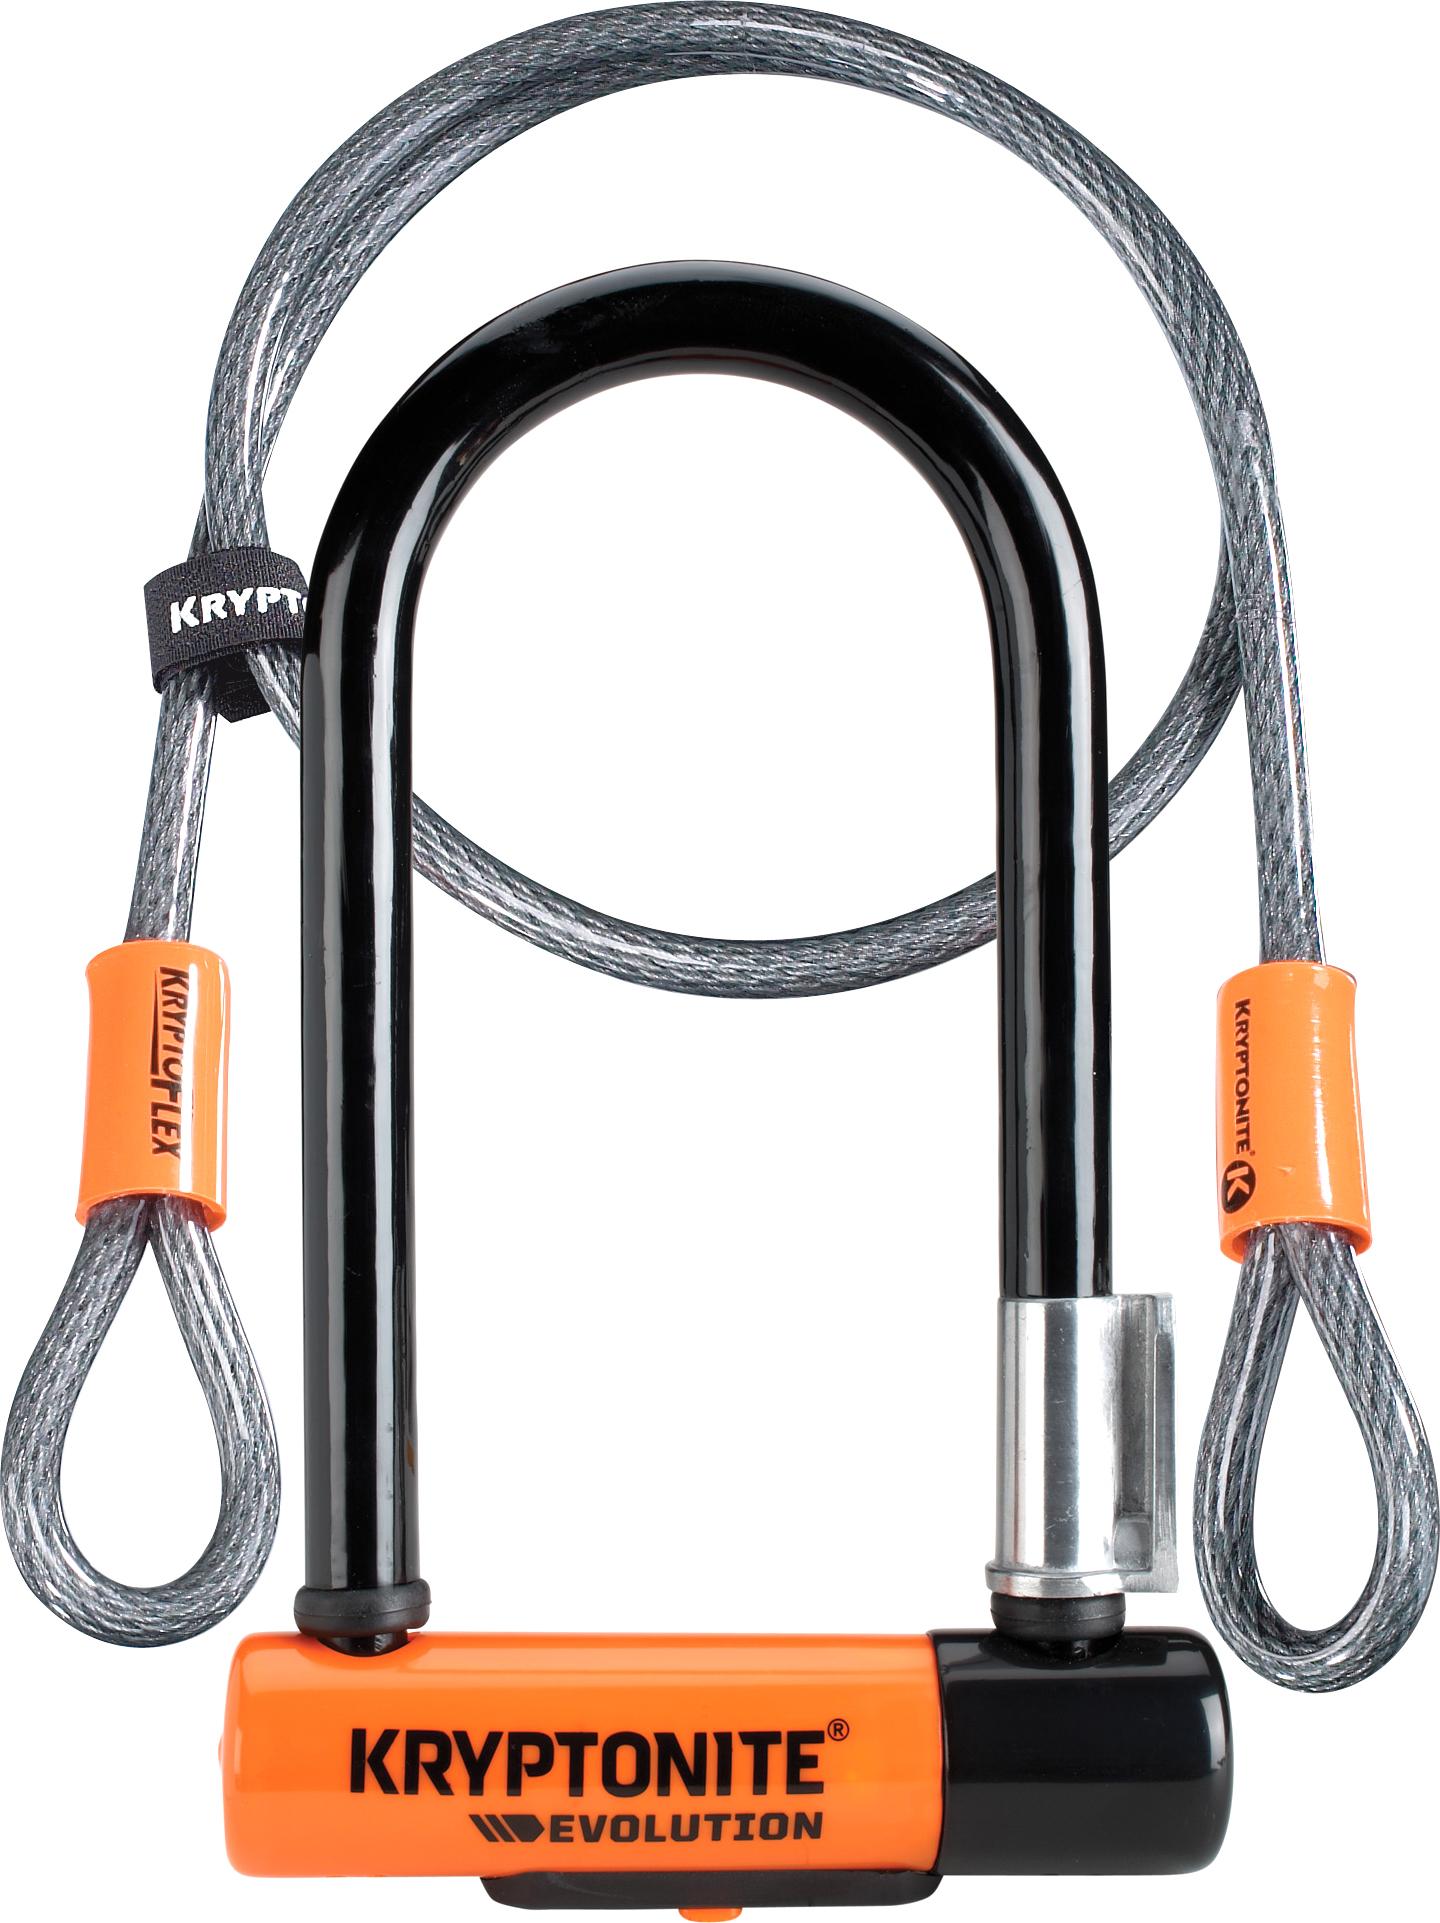 Kryptonite Evolution Mini 7 Bike Lock And Kryptoflex Cable - Black/orange